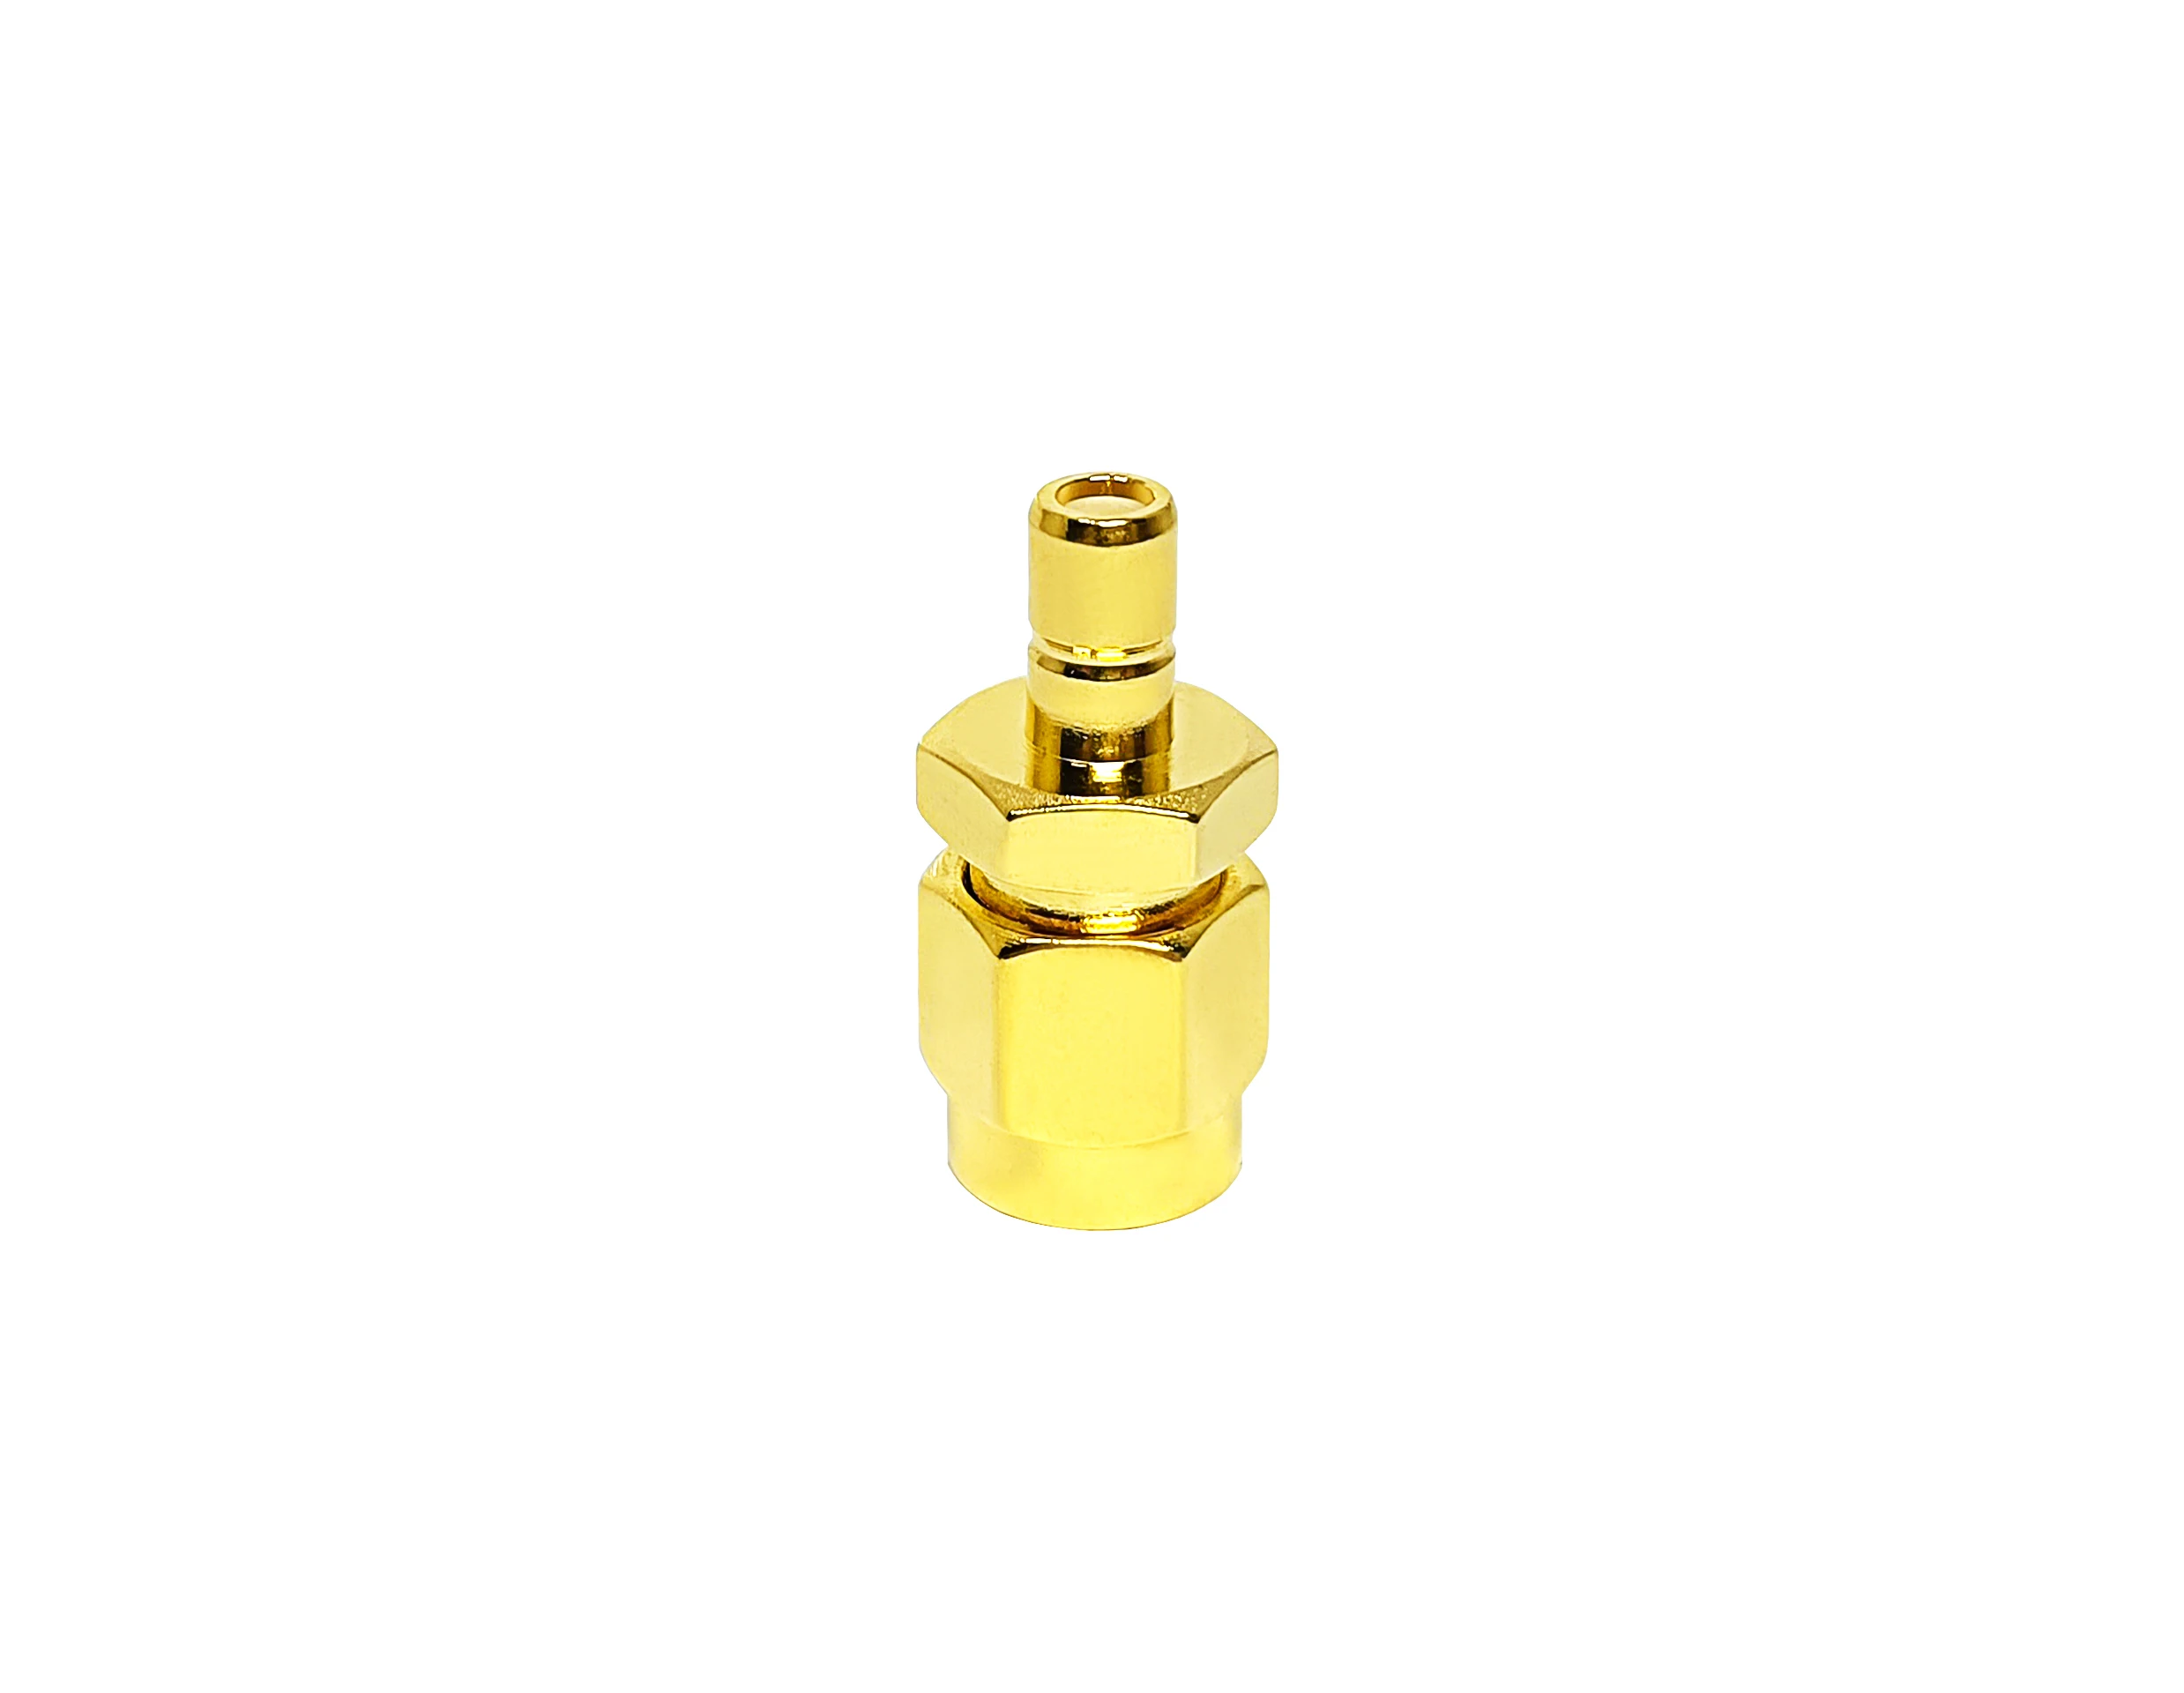 Adapters jack plug  N  sma  Smb  7/16 din  4.310 din male female Kits coaxial adaptor manufacture